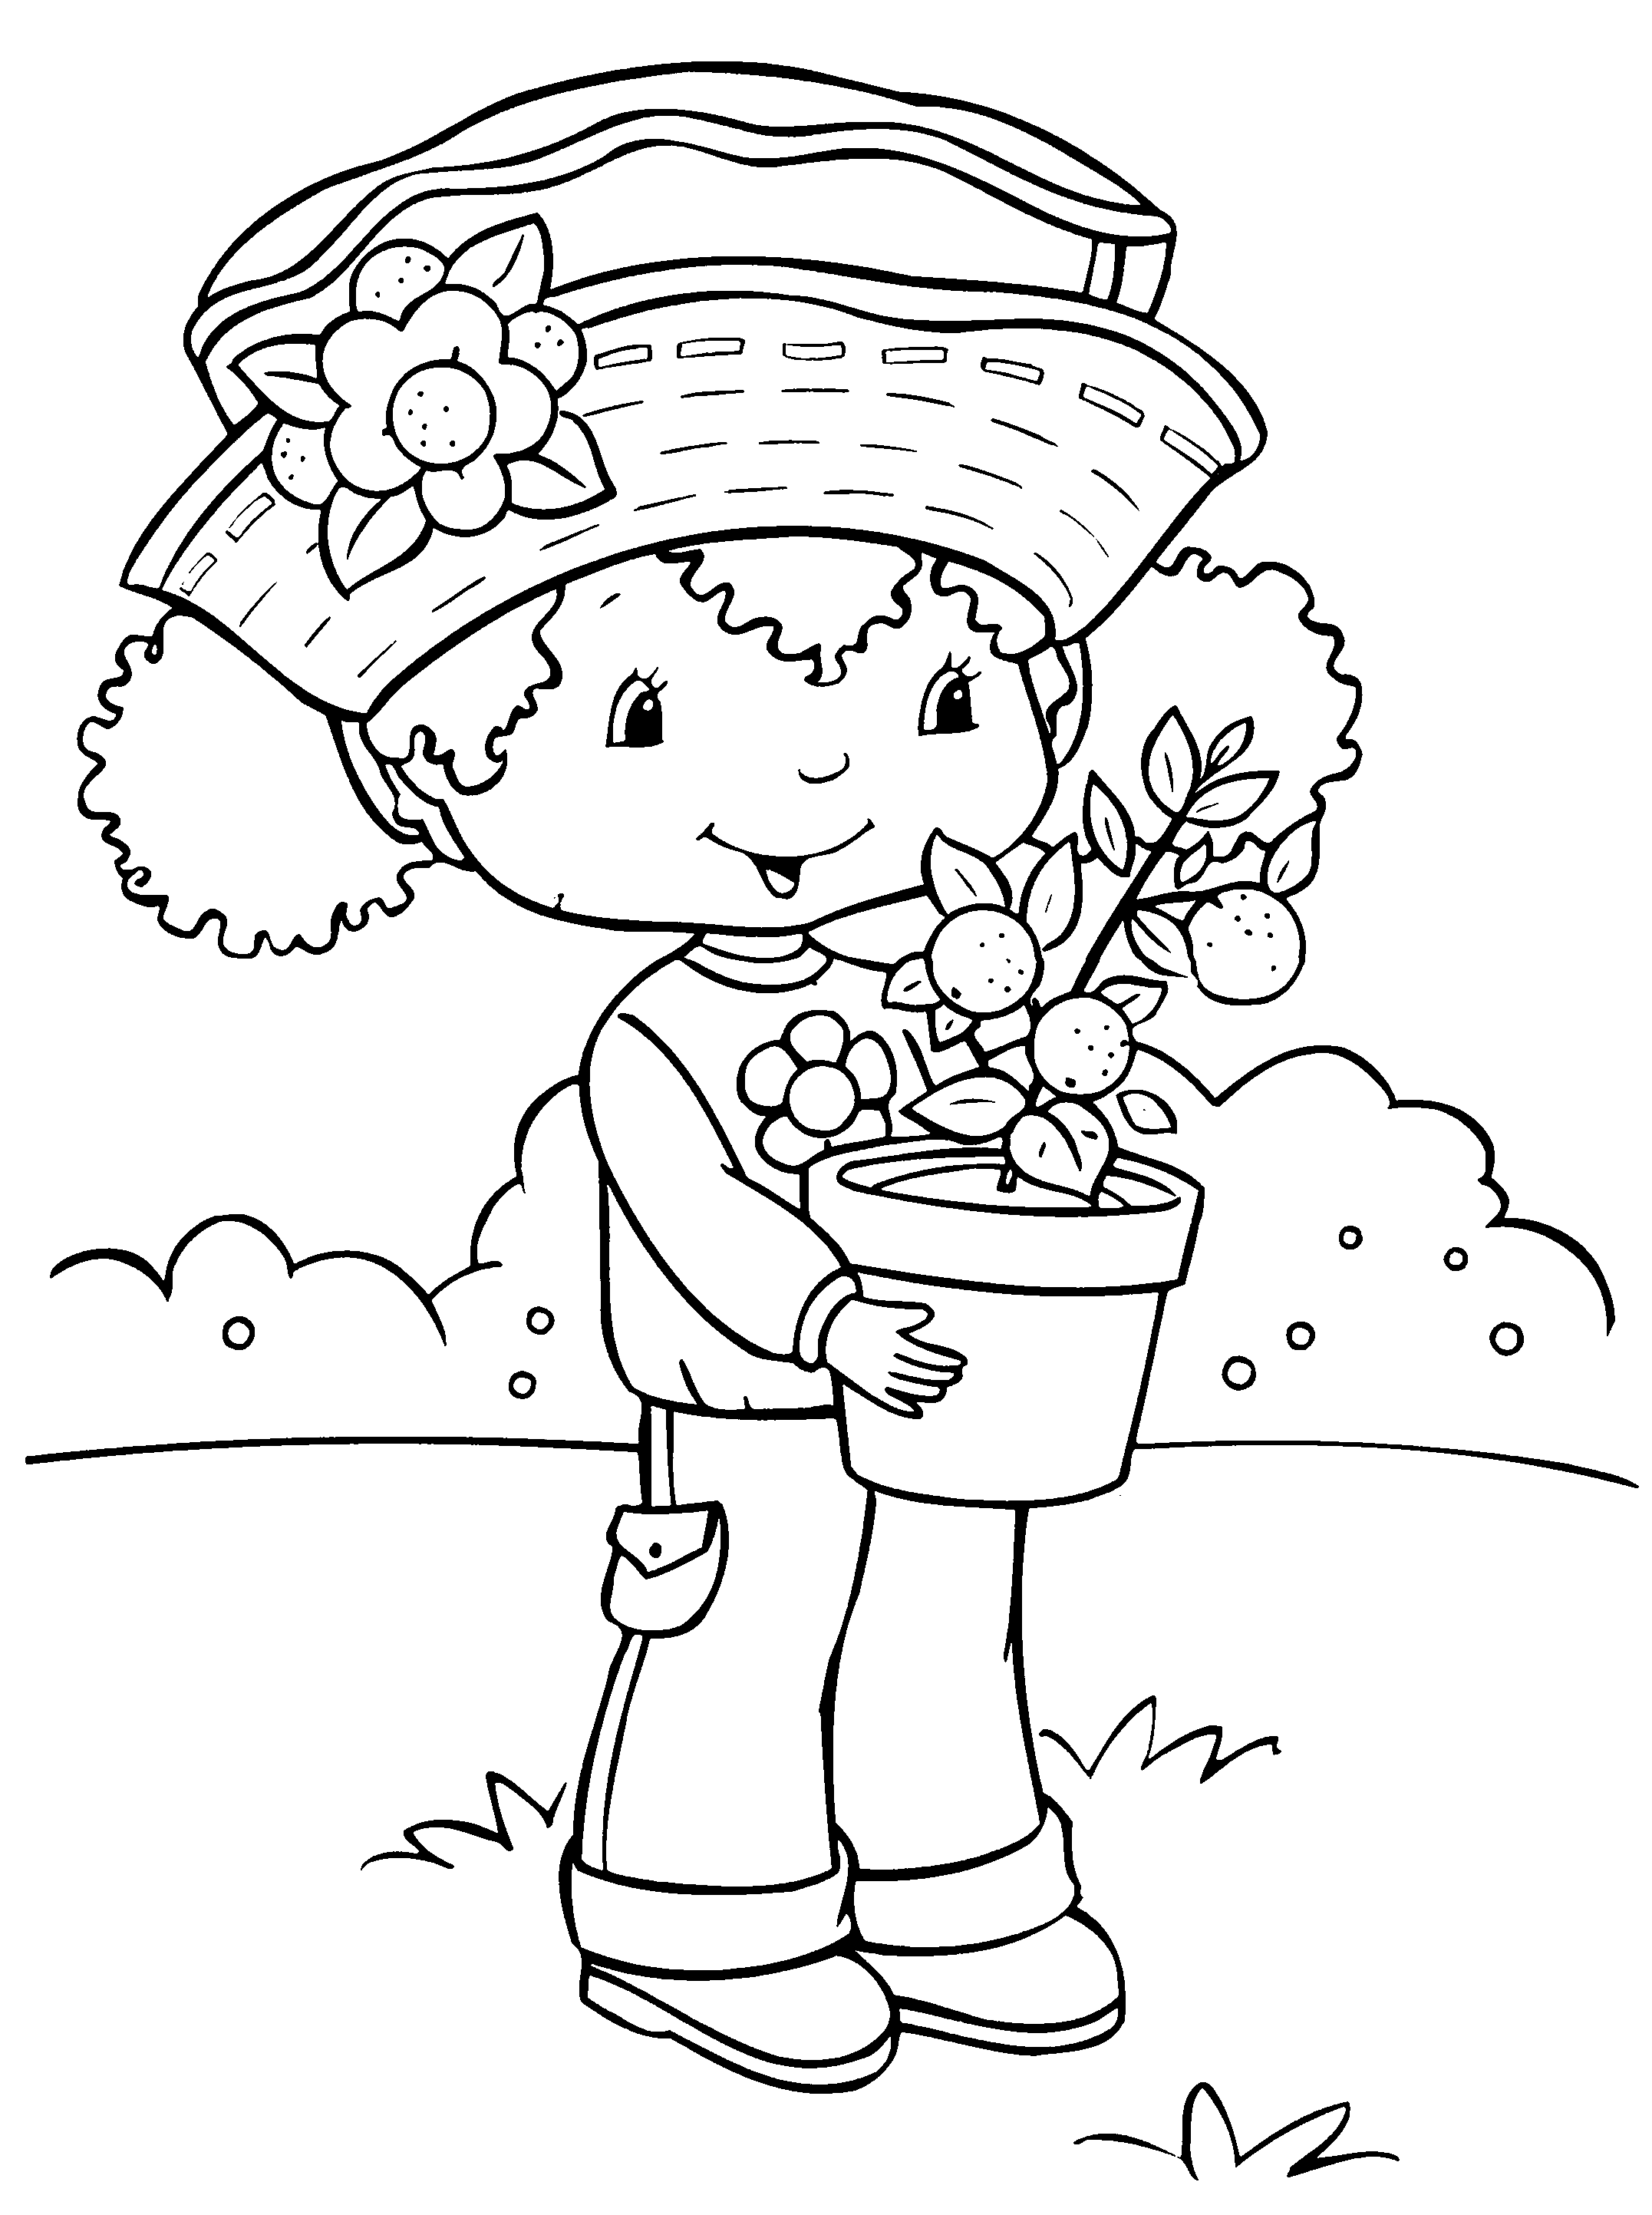 Strawberry Shortcake drawing to print